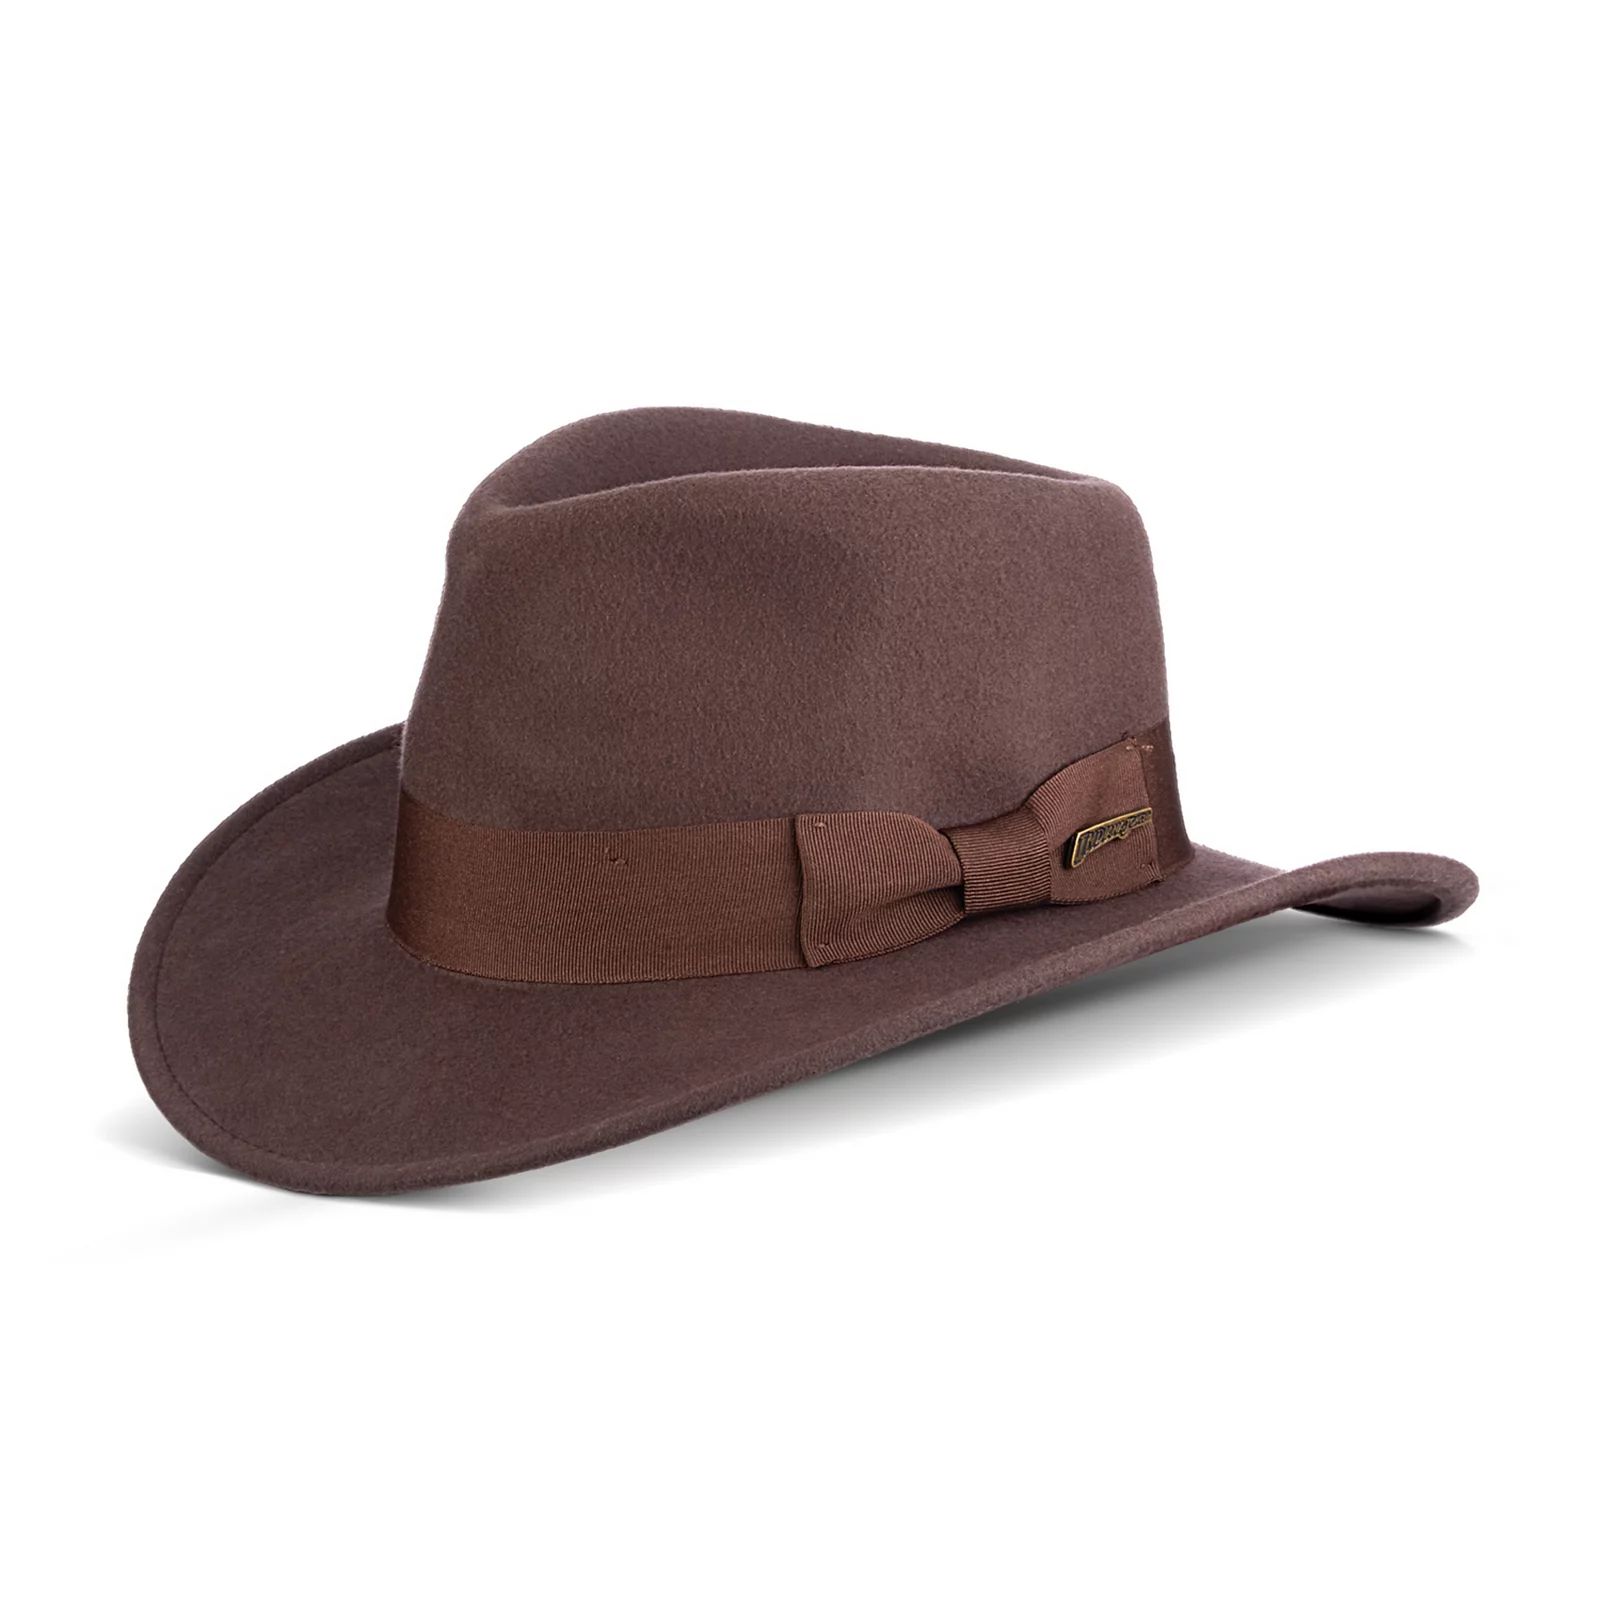 Men's Indiana Jones Wool Felt Outback Hat, Size: XL, Brown | Kohl's